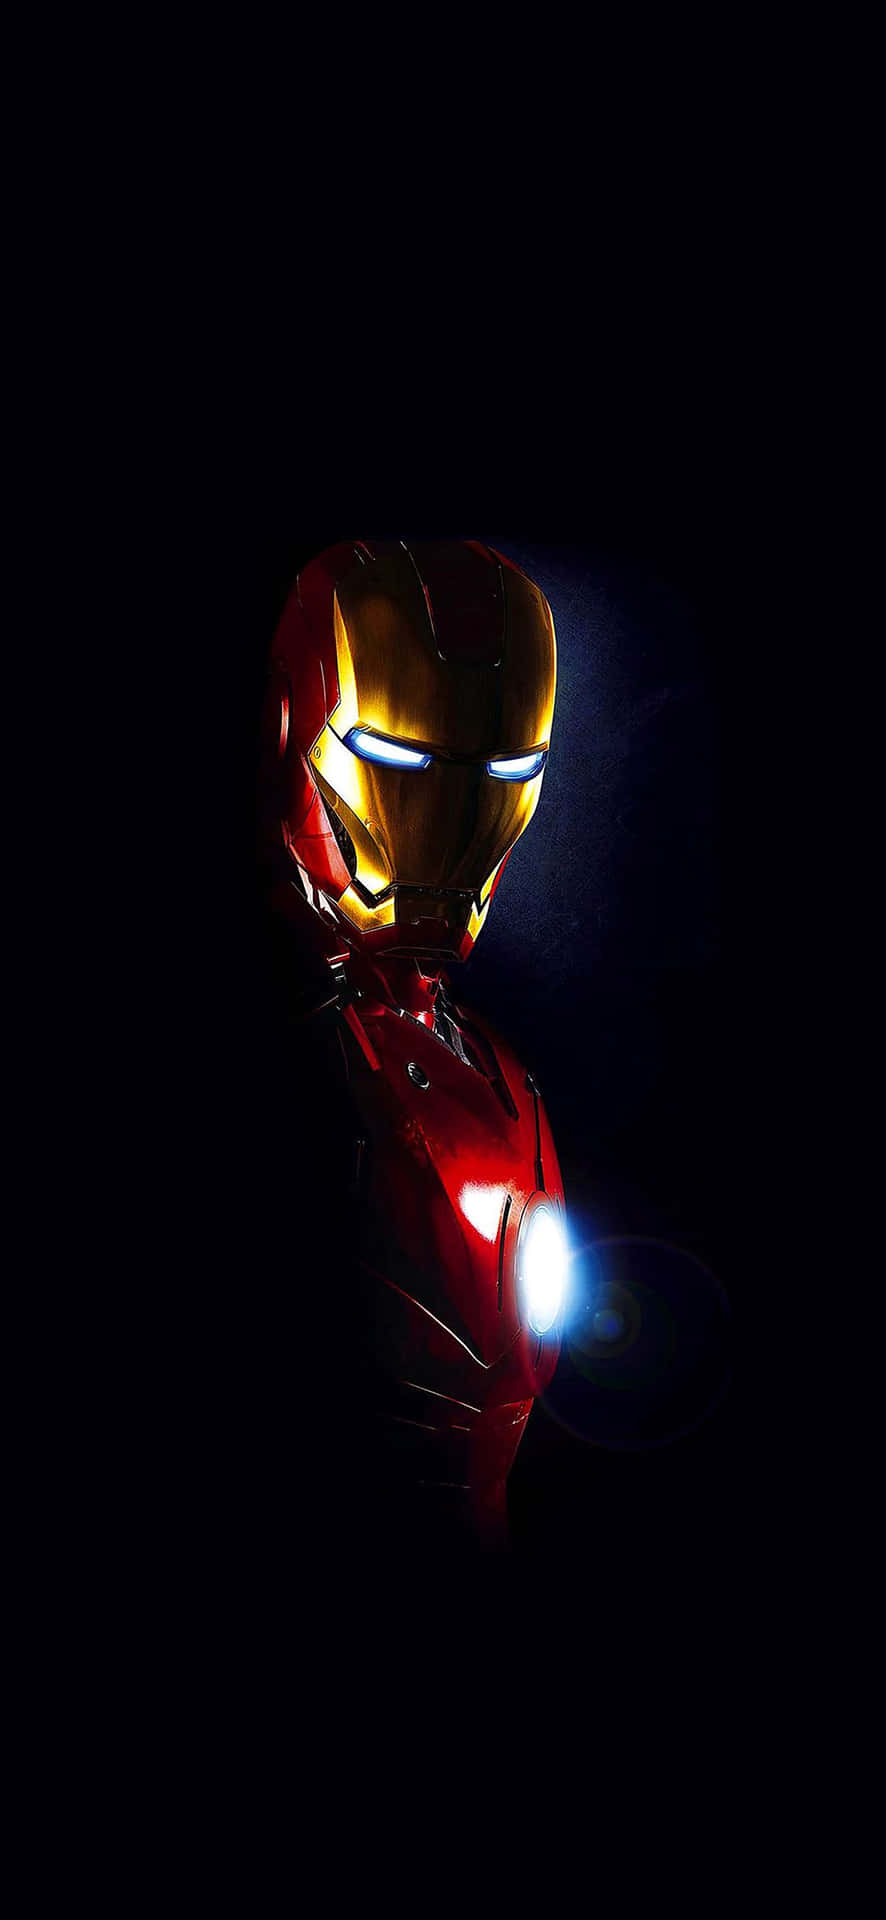 Desvendeo Poder Do Iron Man No Iphone X. Papel de Parede